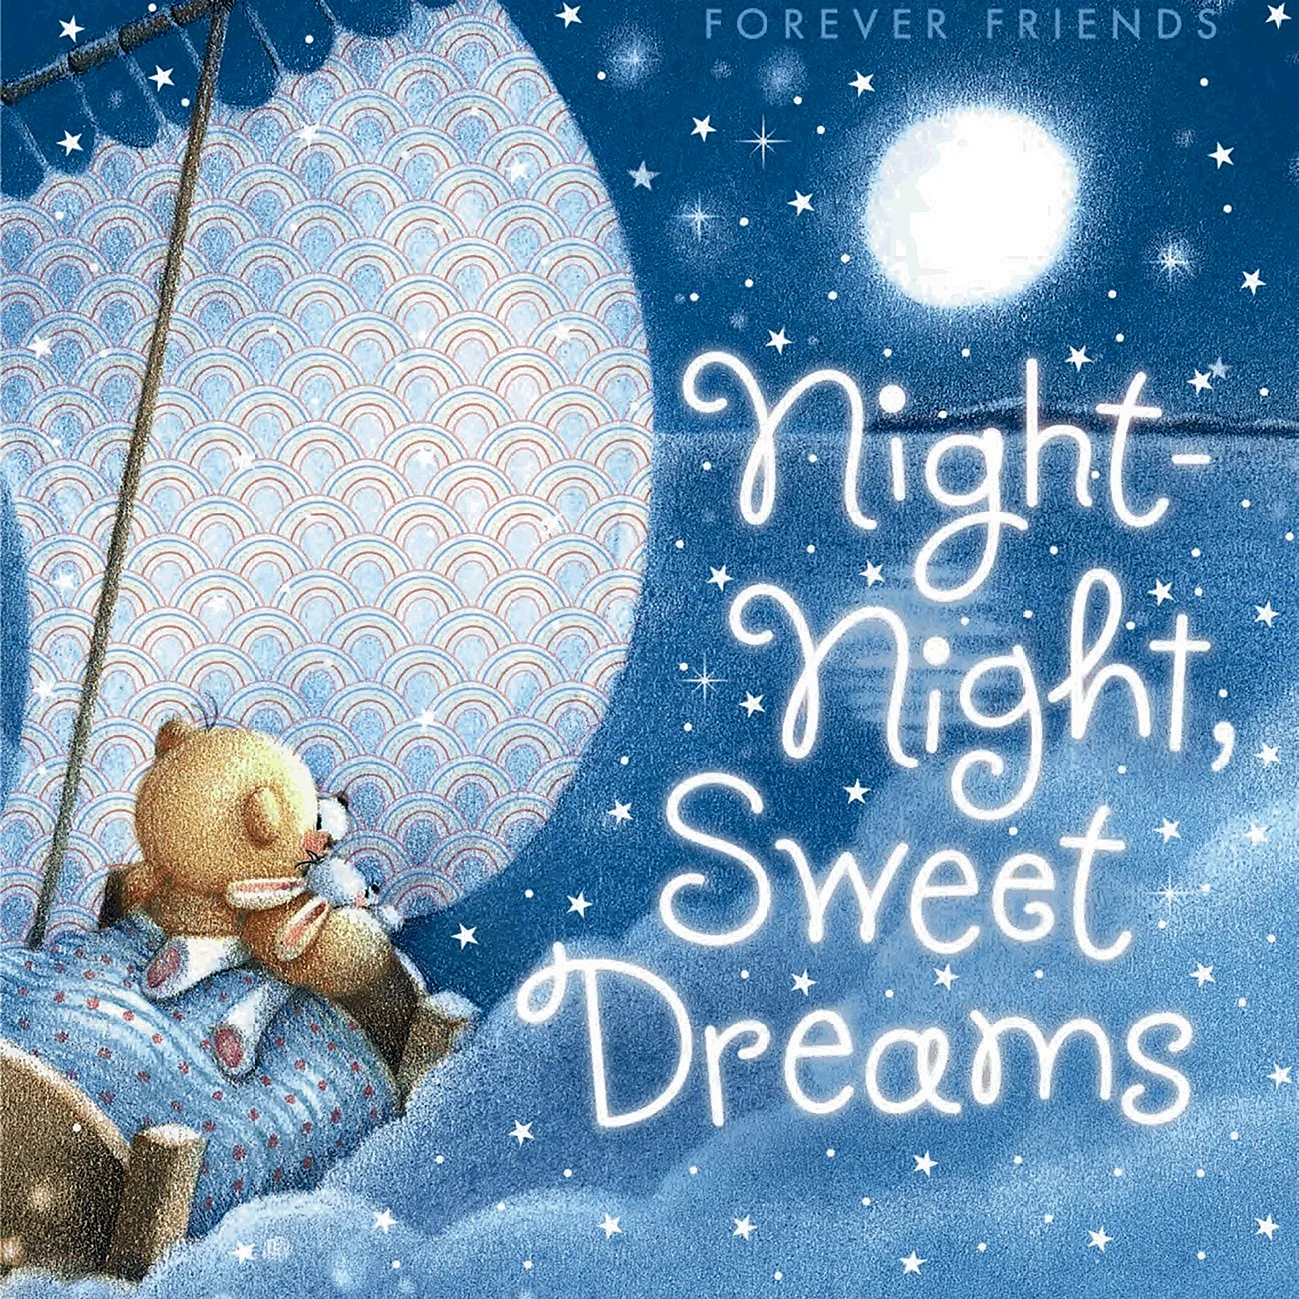 My dreams my friend. Открытки good Night Sweet Dreams. Сладкой ночи. Доброй ночи картинки. Спокойной ночи на английском.